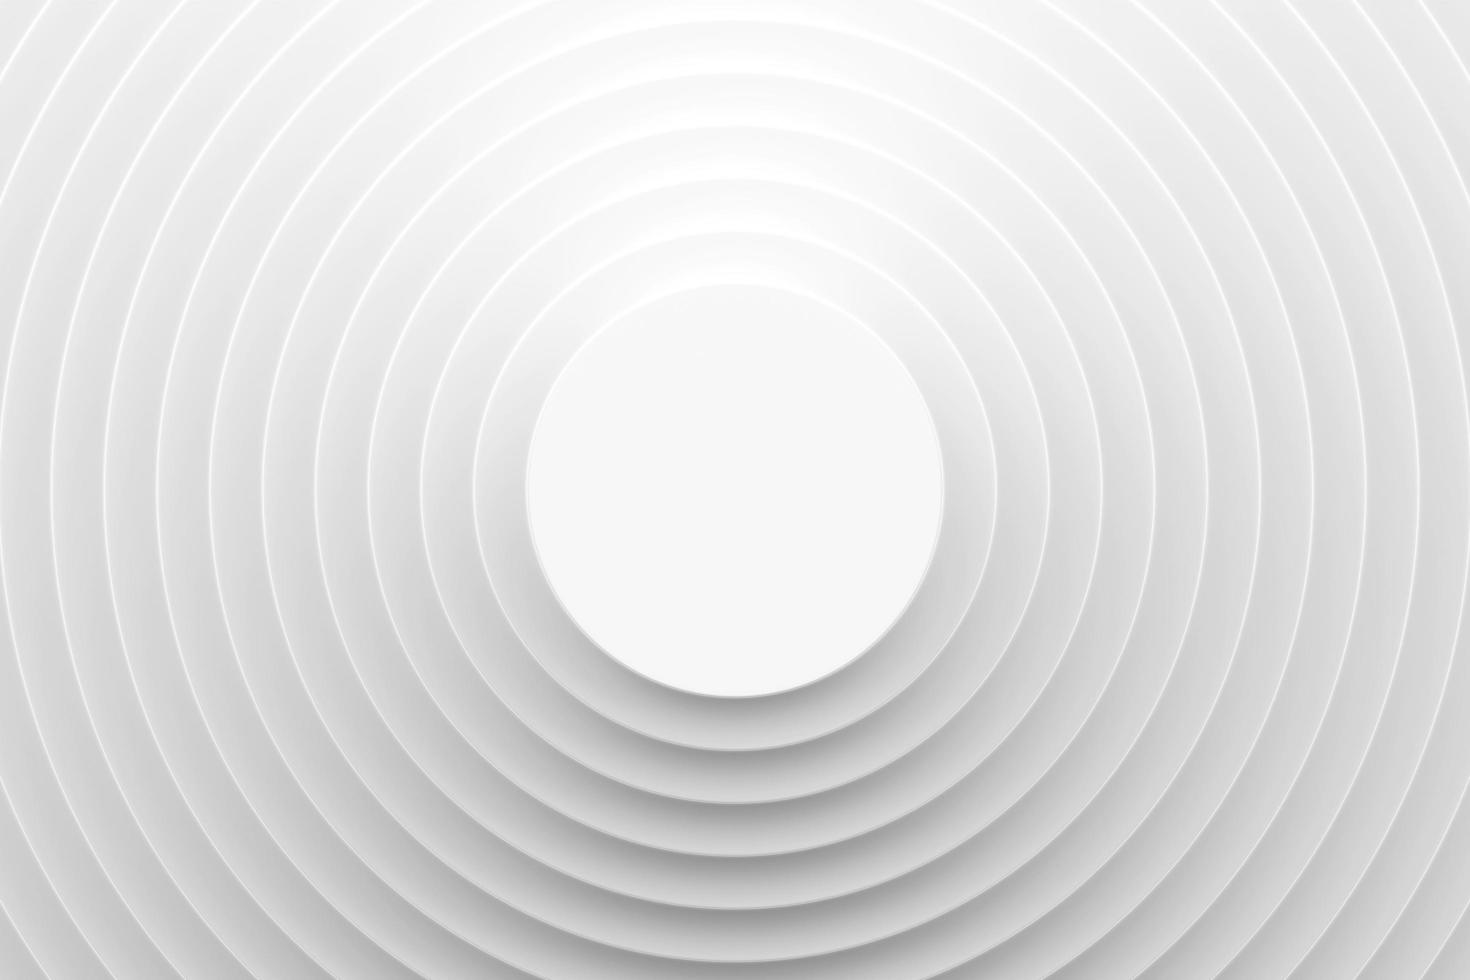 3d hacer textura con circulo partes rotación. espiral superficie concepto. 3d blanco círculos resumen modelo para web modelo fondo, folleto cubrir o aplicación geométrico 3d representación foto